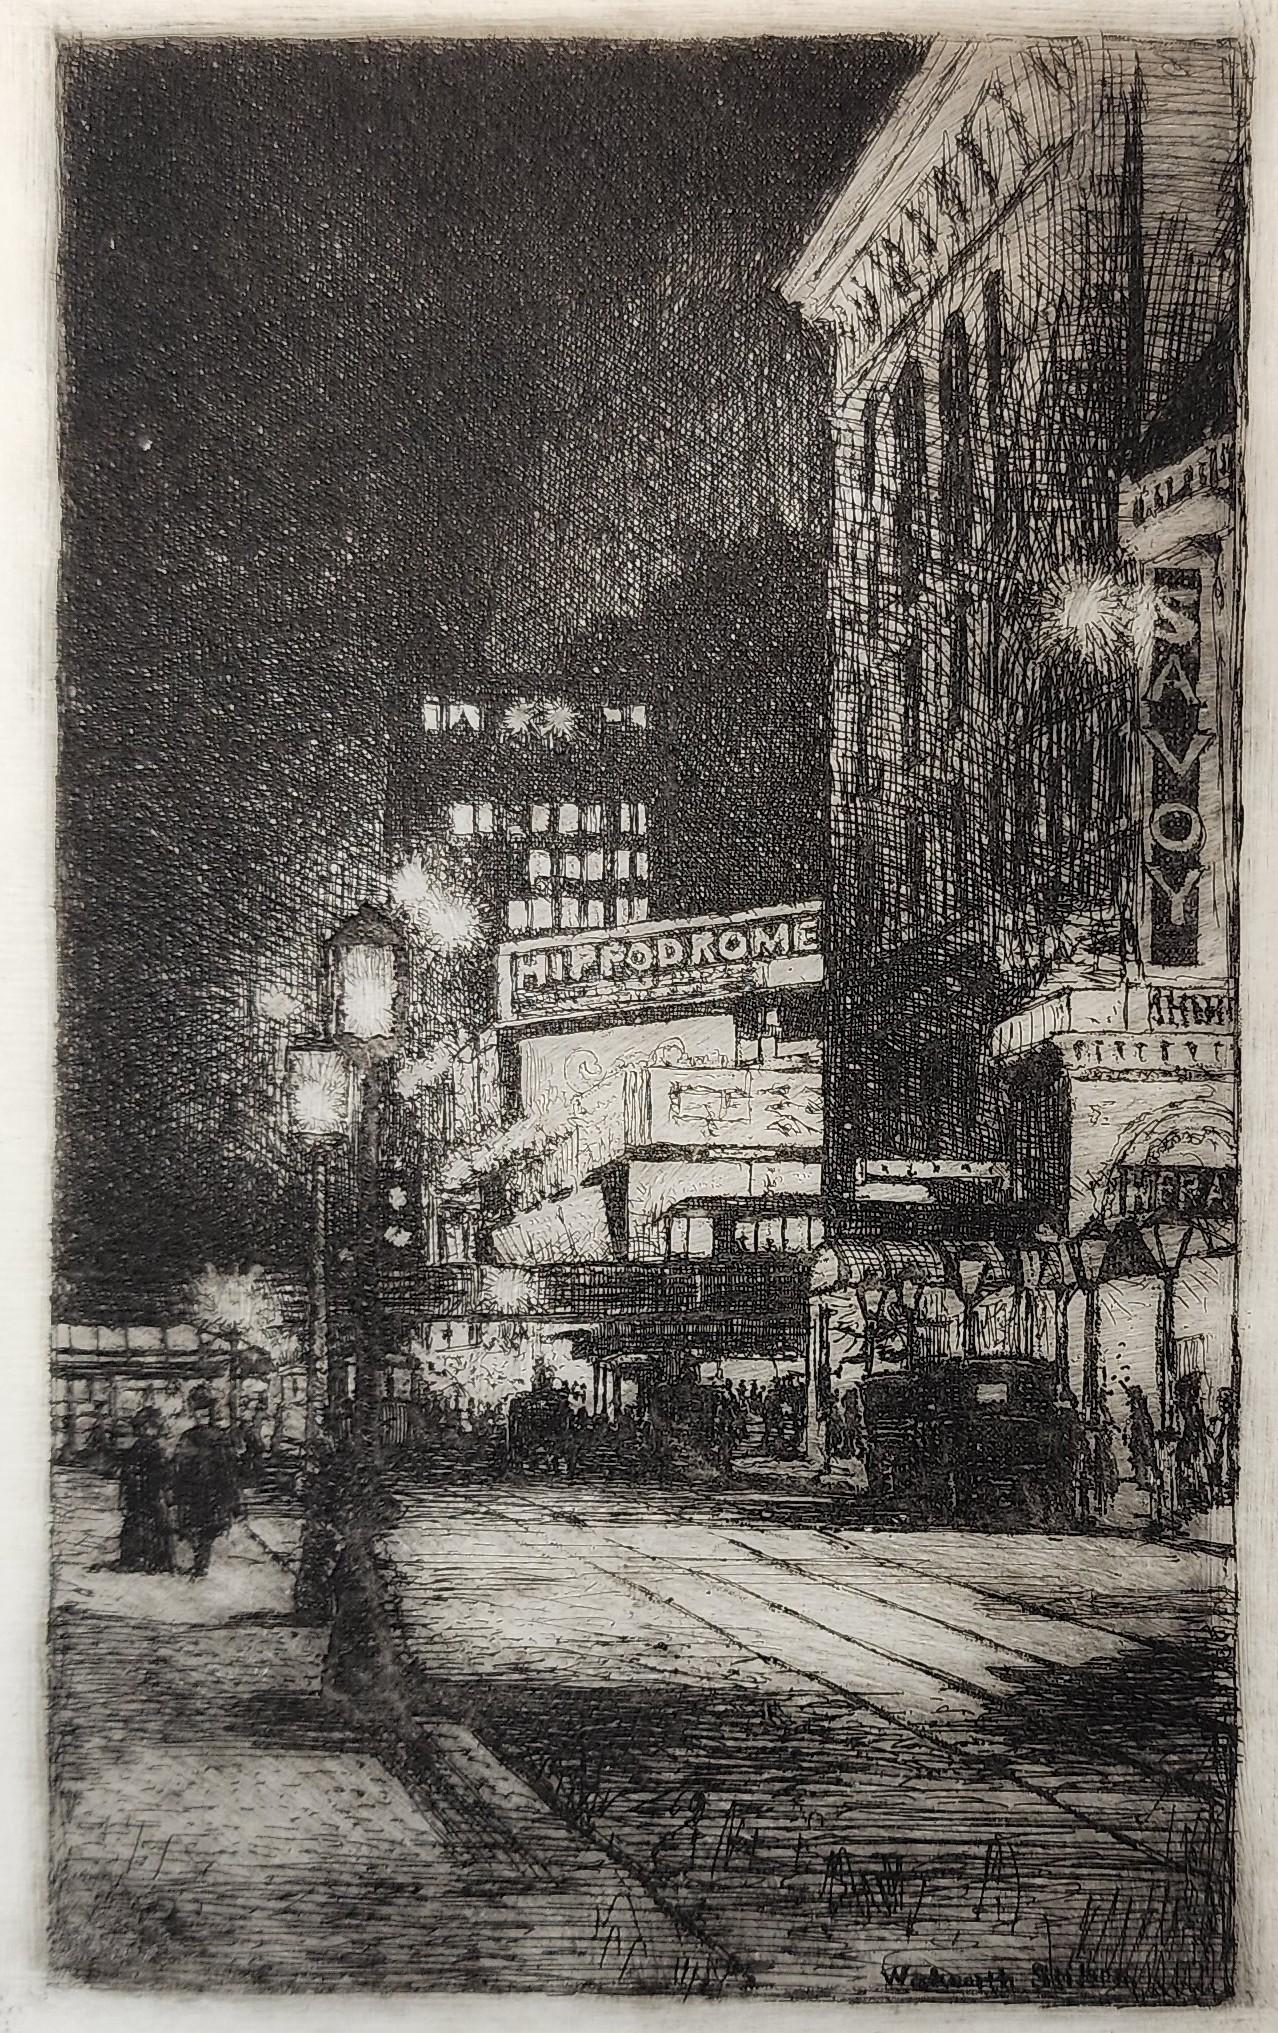  Hippodrome, 1910 Etching, New York City History, NYC - Print by William Walworth Stilson